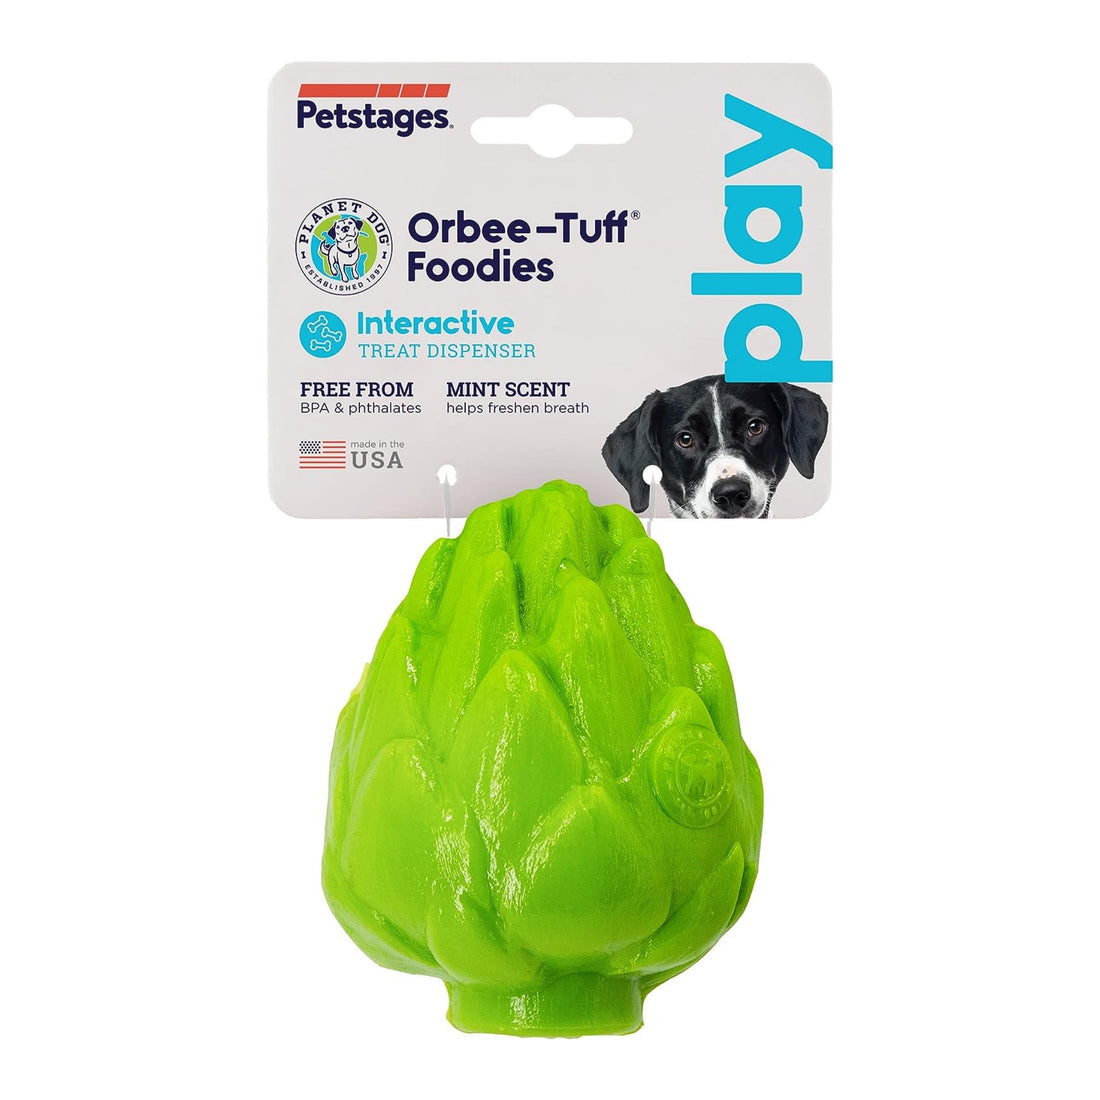 Planet Dog Orbee-Tuff Foodies Artichocke, jouet pour chien